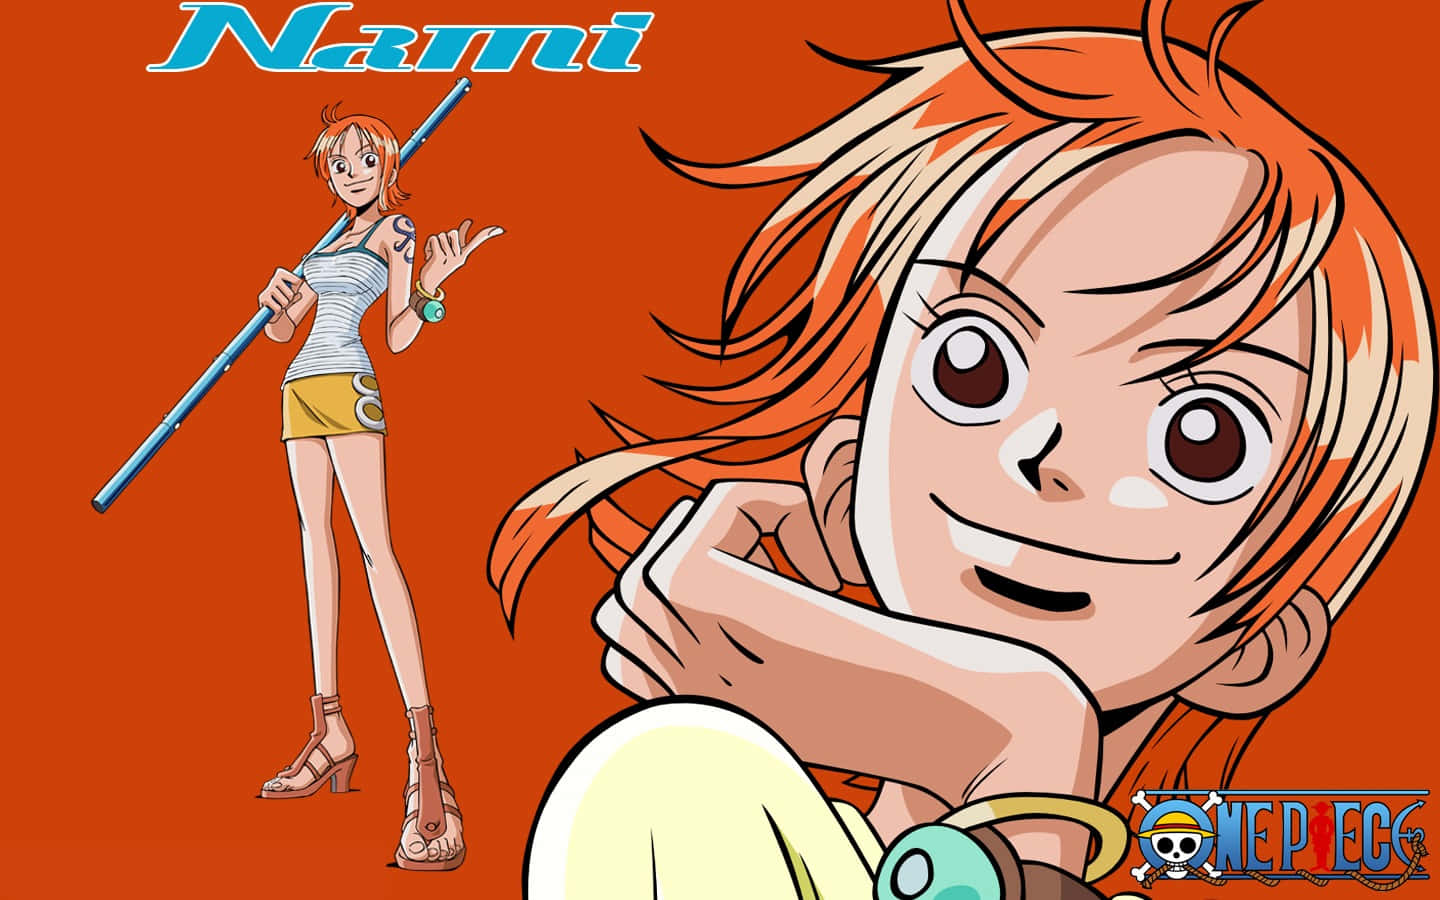 Download Young Nami One Piece Against Dark Orange Backdrop Wallpaper ...